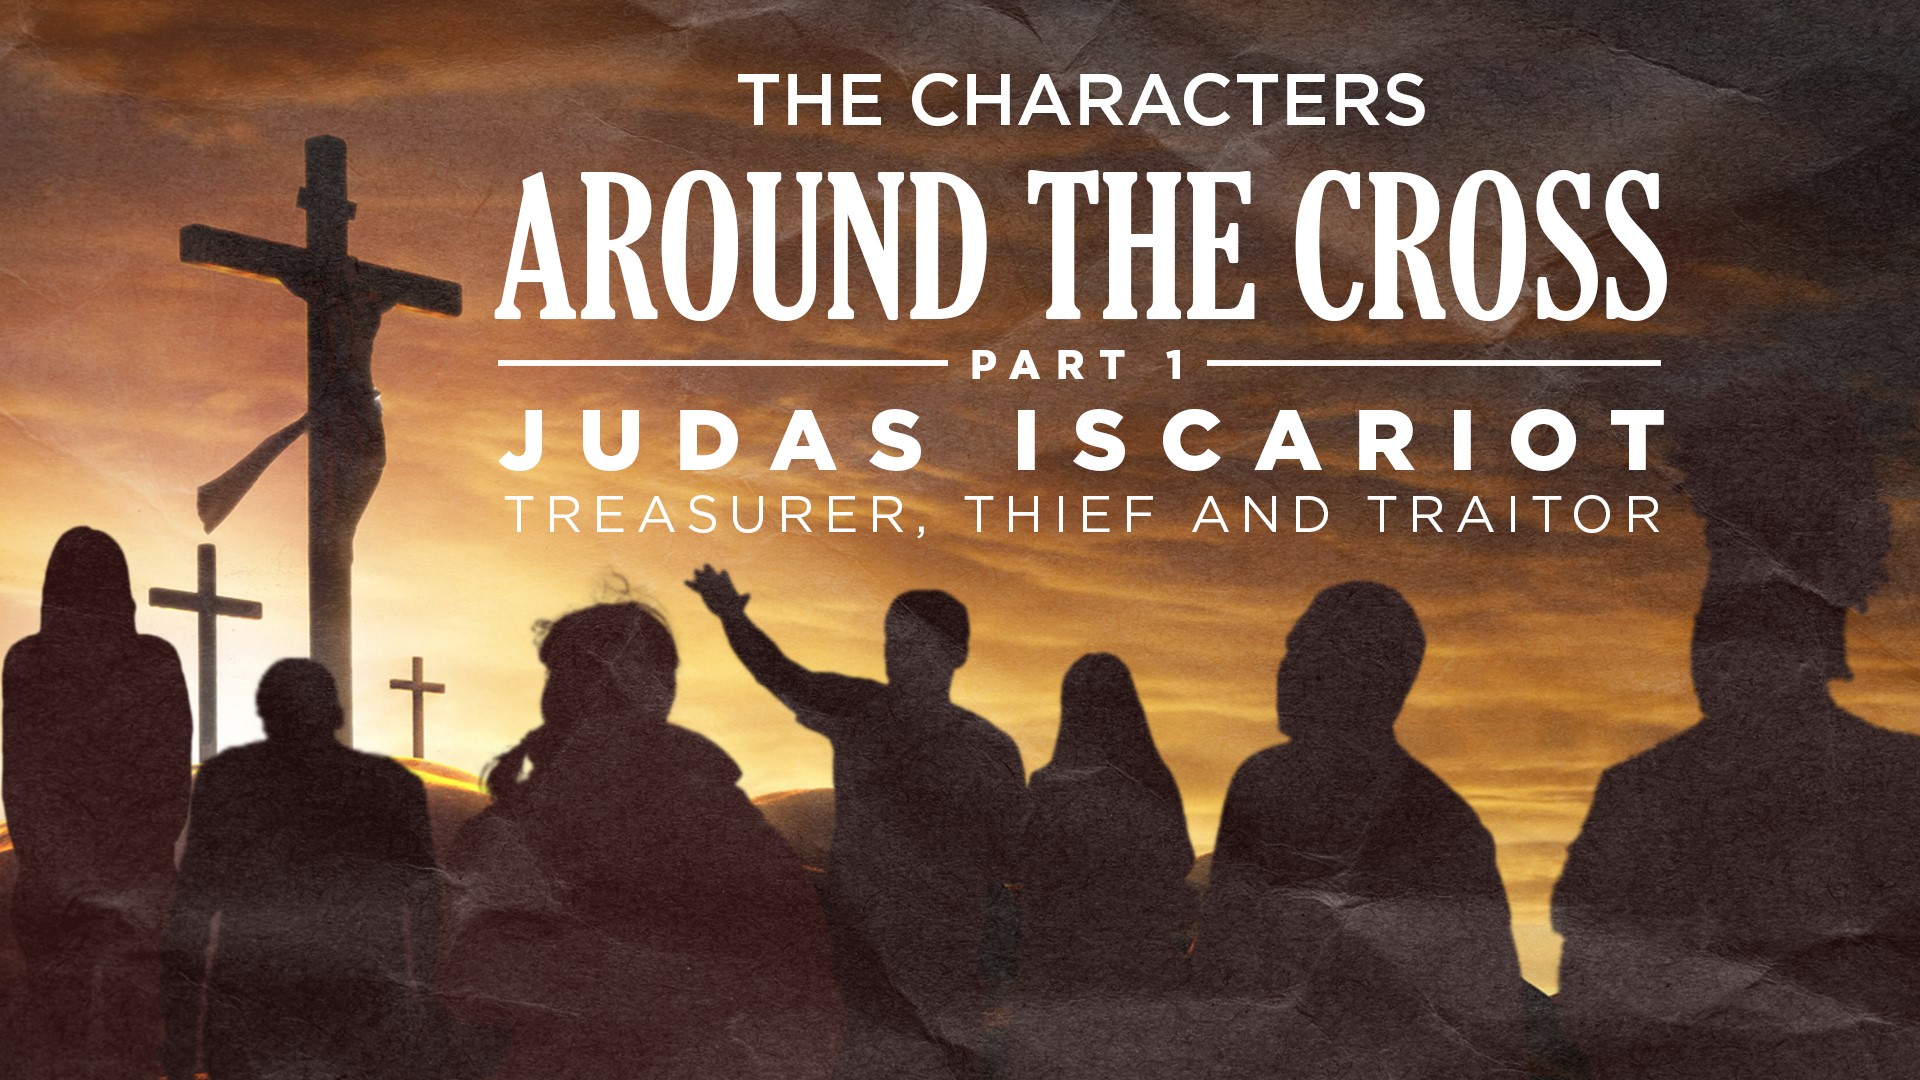 Part 1: Judas Iscariot - Treasurer, Thief and Traitor 